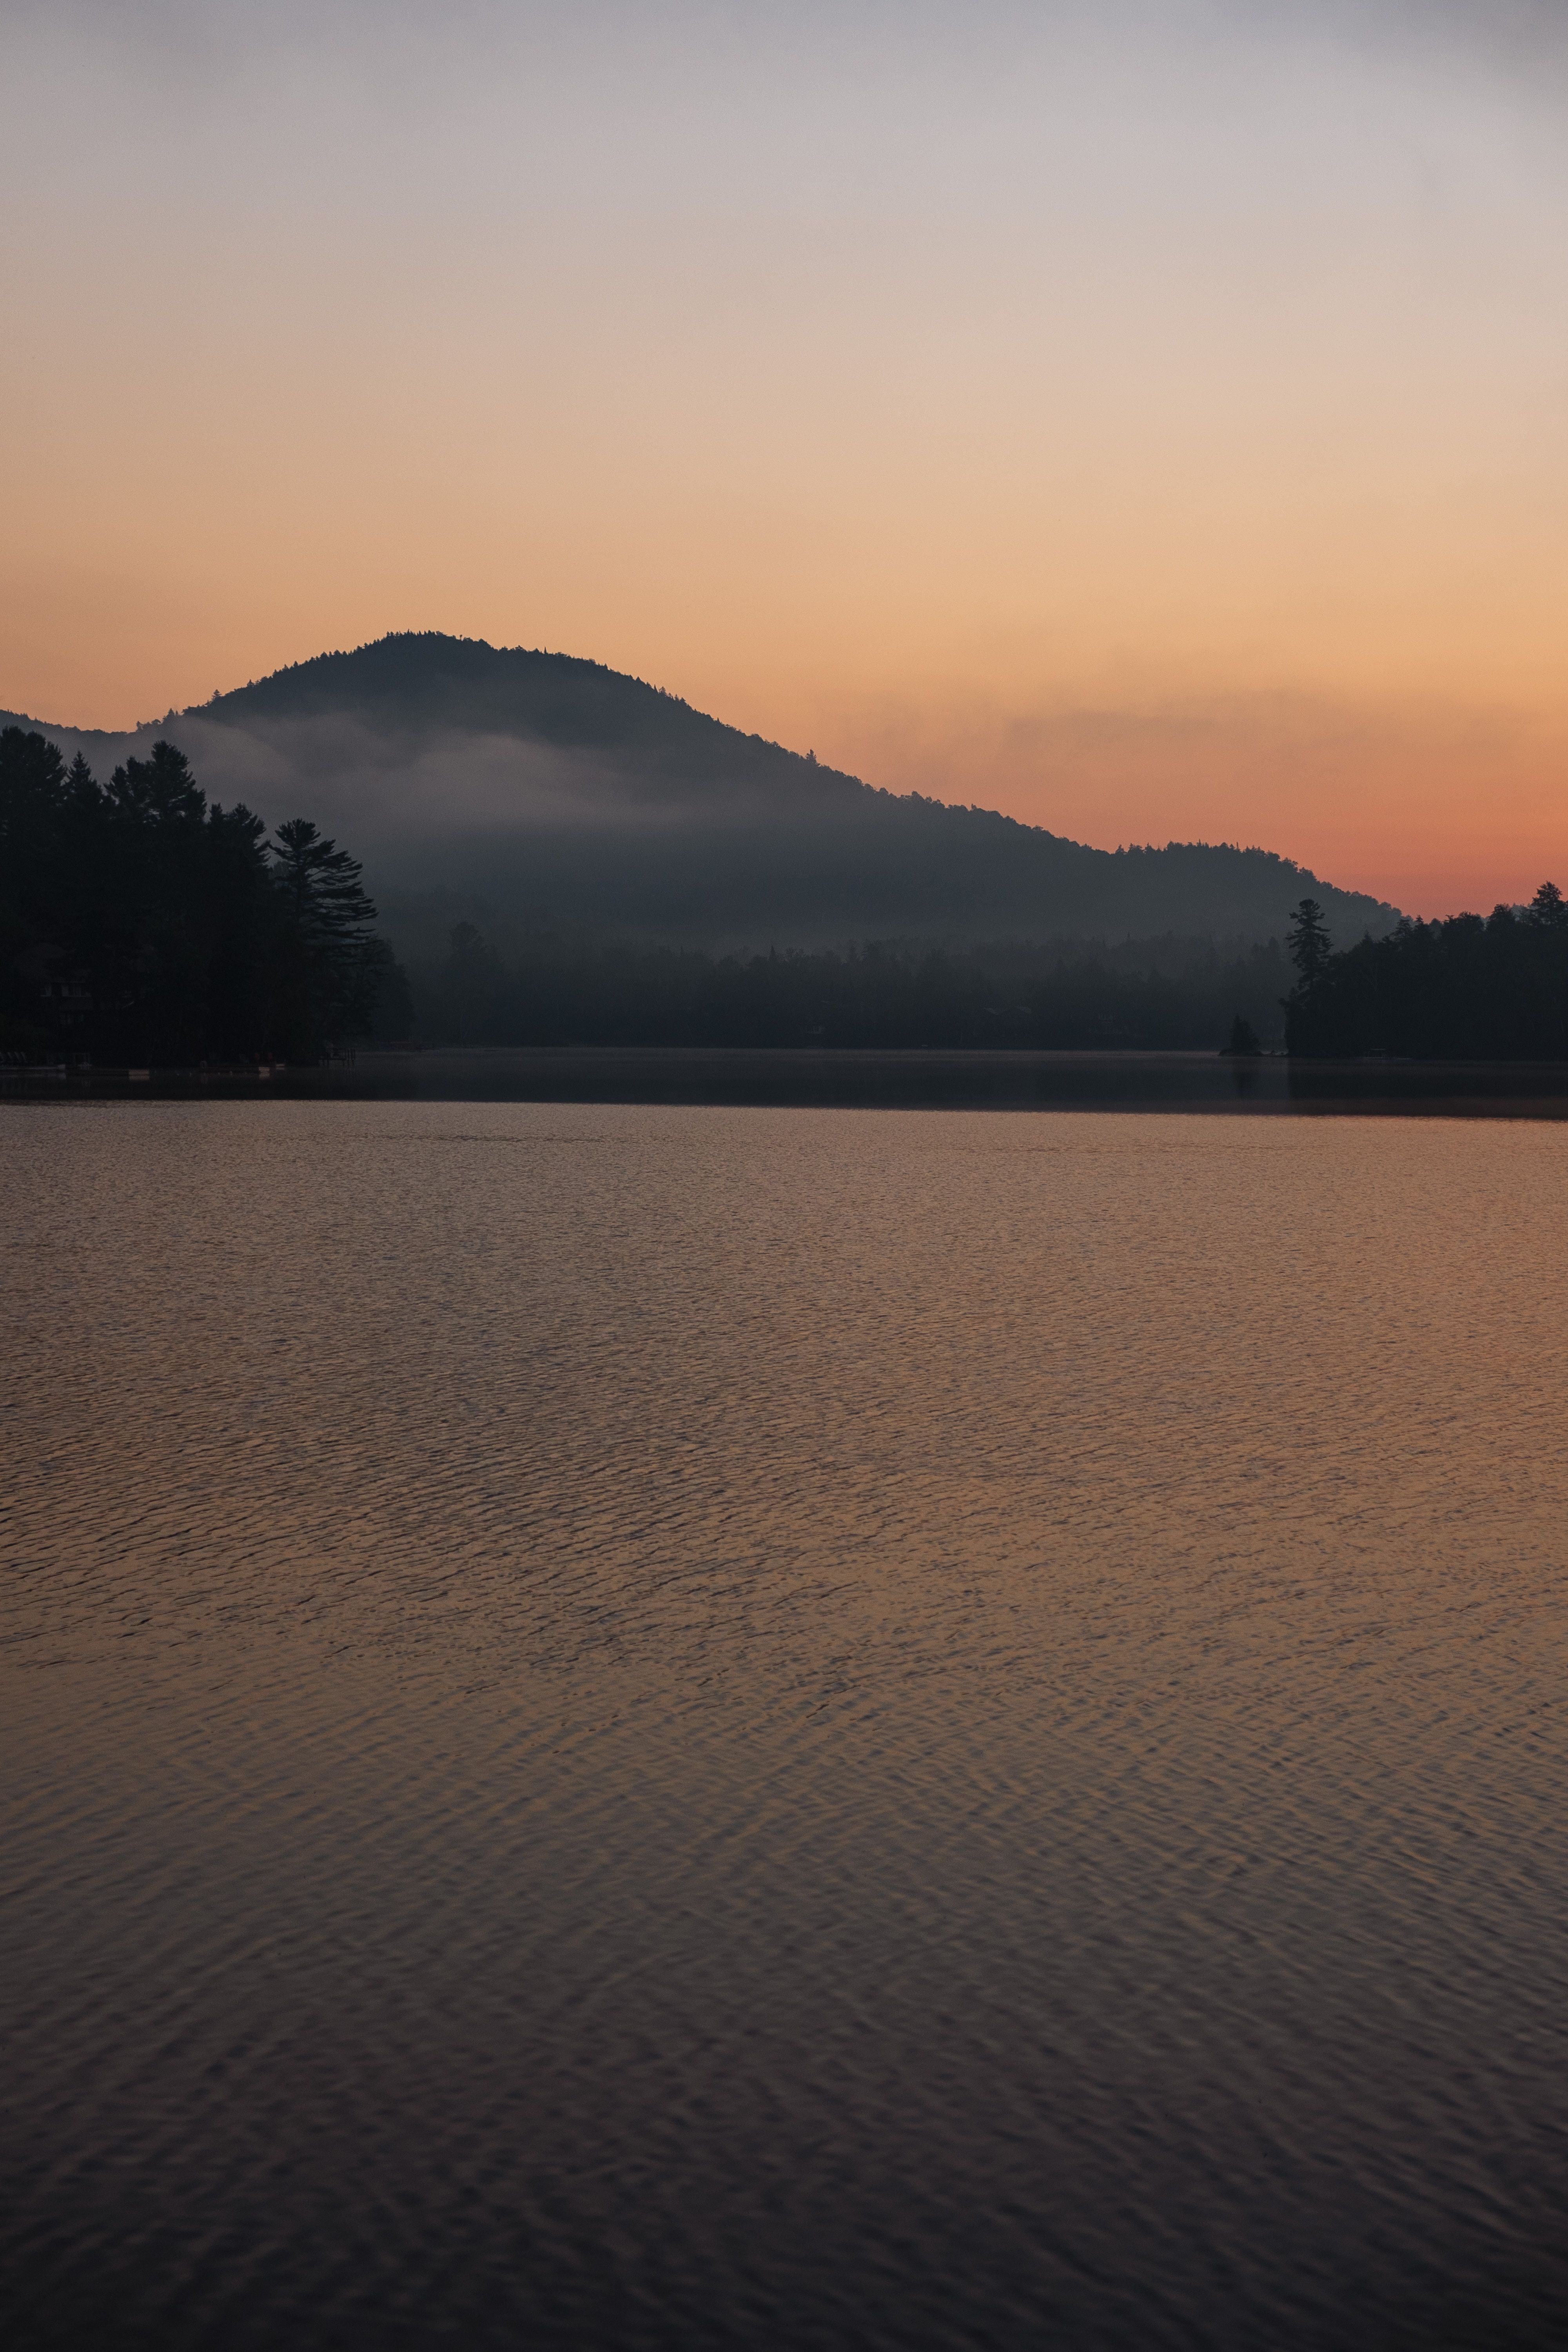 Lake Placid at sunset in the Adirondacks, Upstate NY